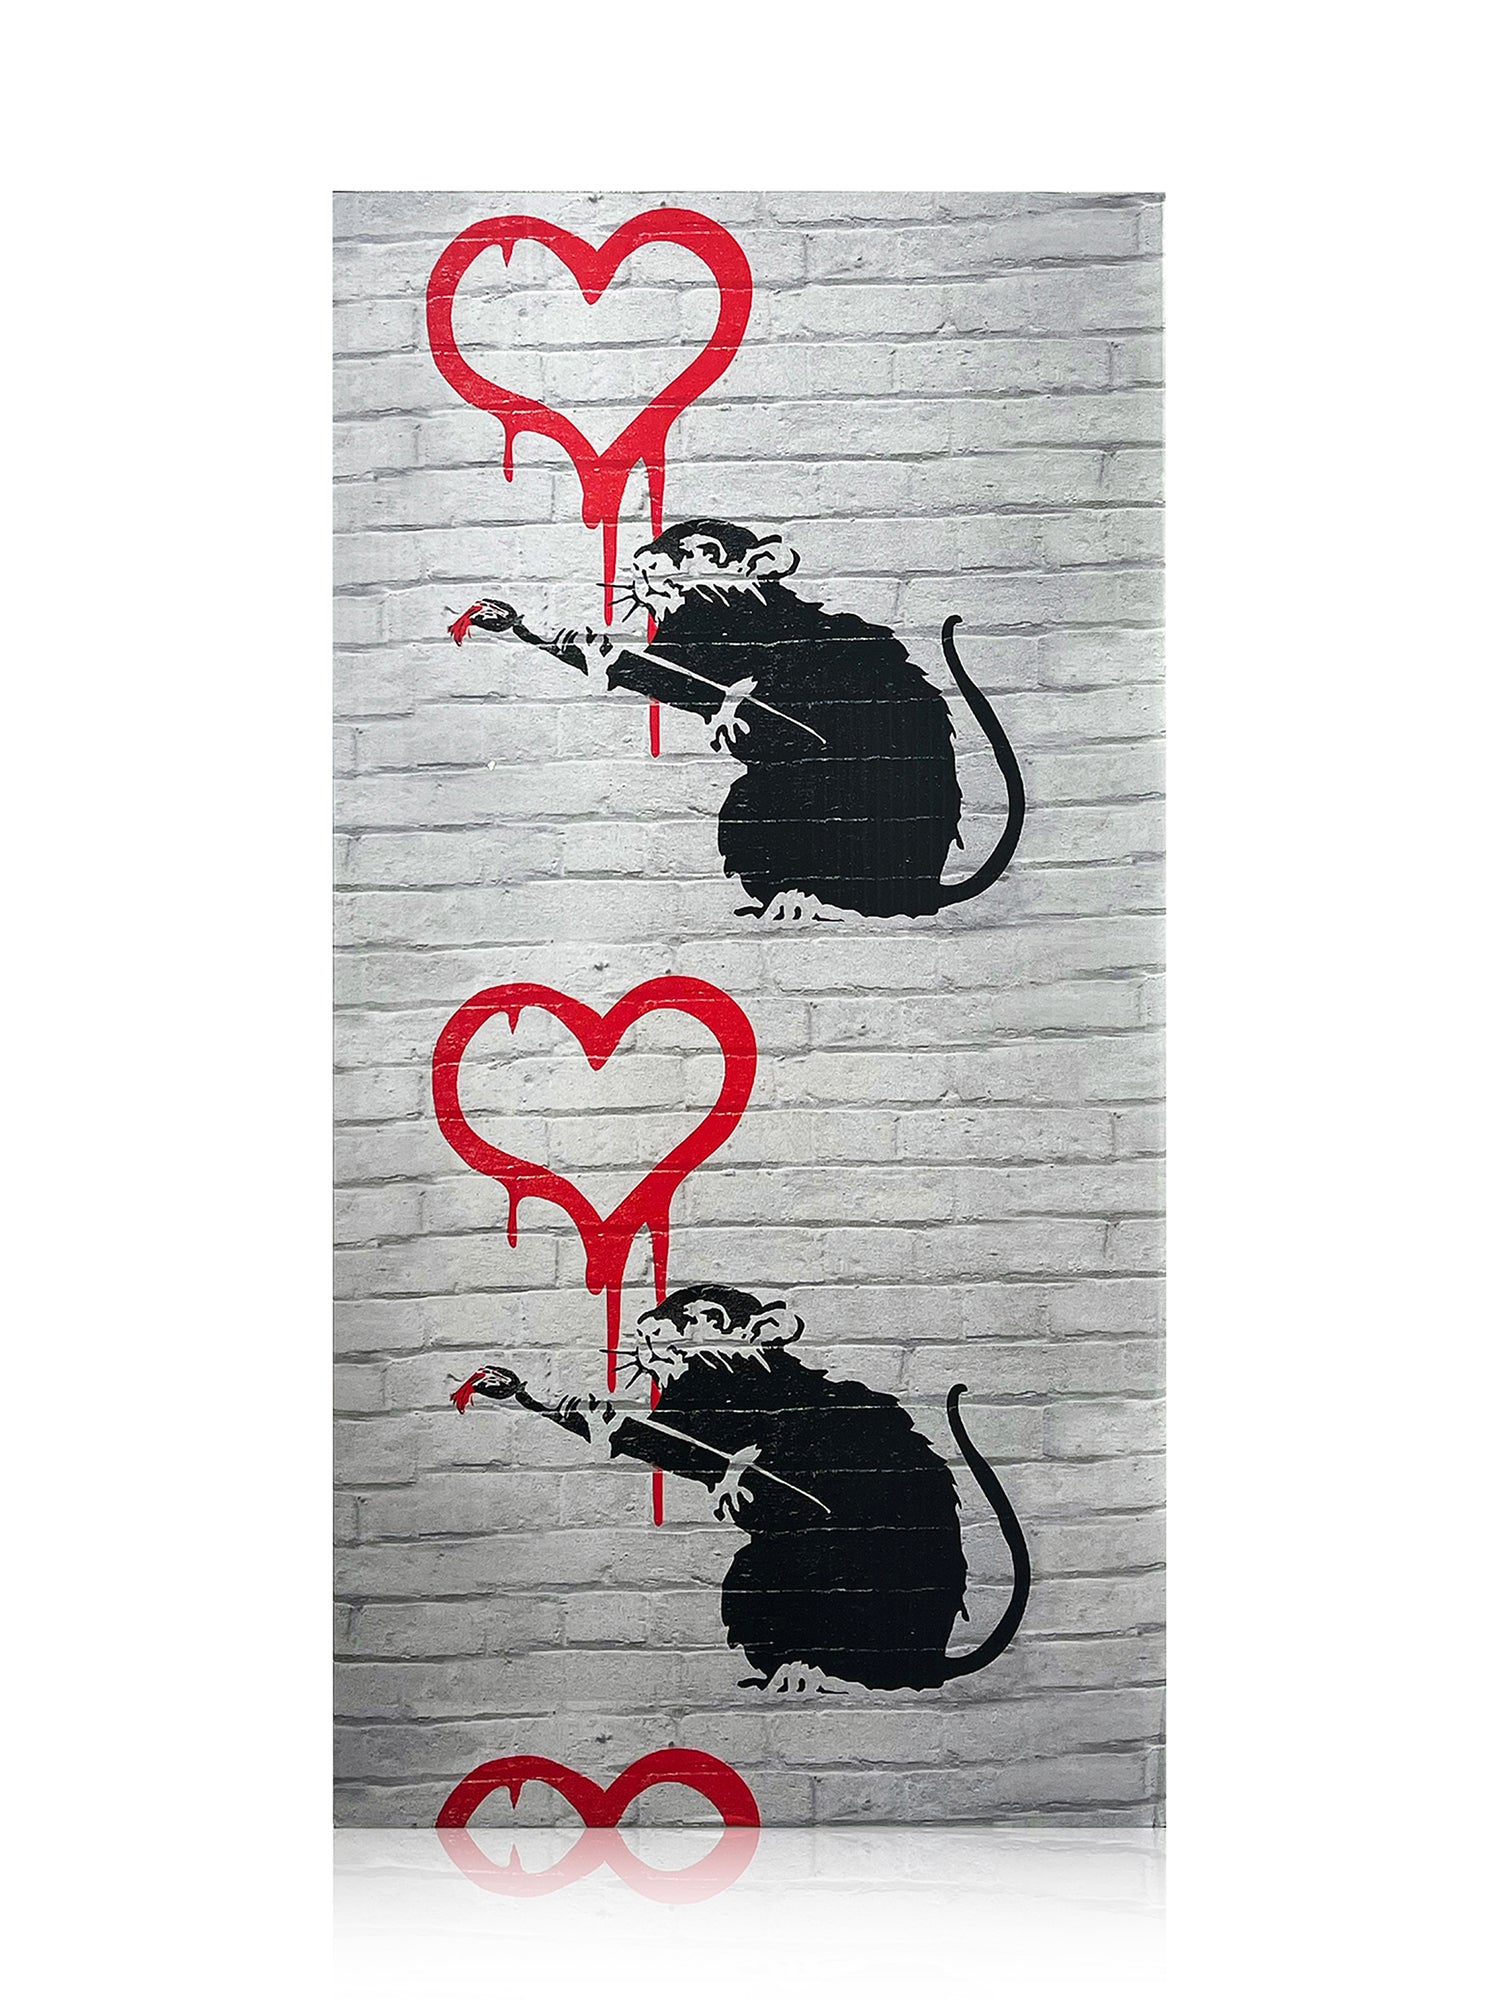 BANKSY Wall Decal Rat With Heart, Banksy Decal, Graffiti Rat